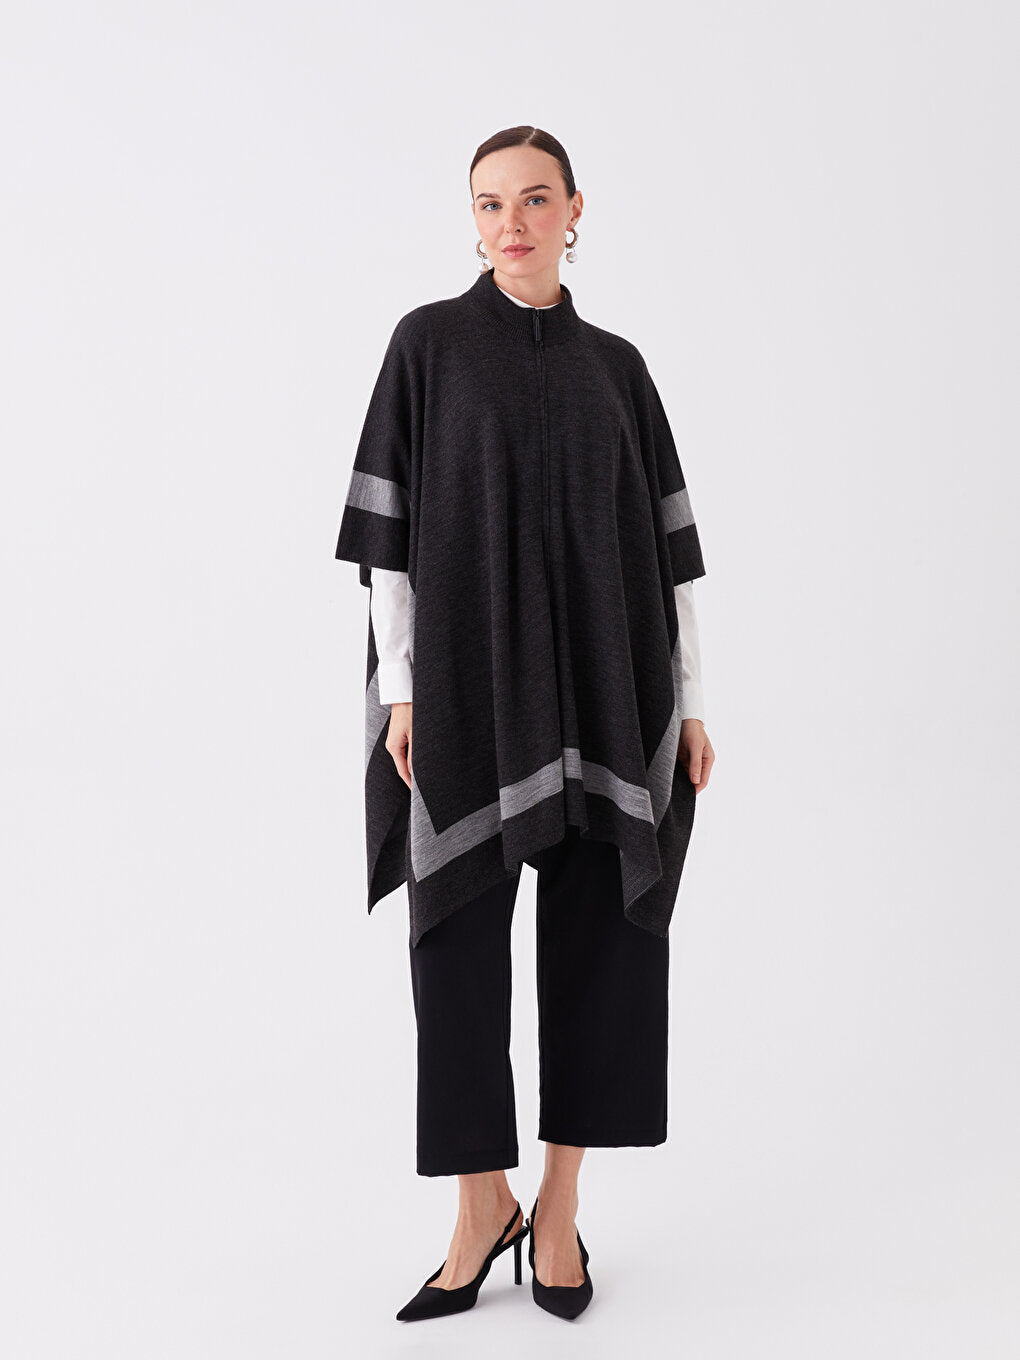 LC WAIKIKI Vertical Collar Strip Patterned Oversize Female Knitwear Poncho